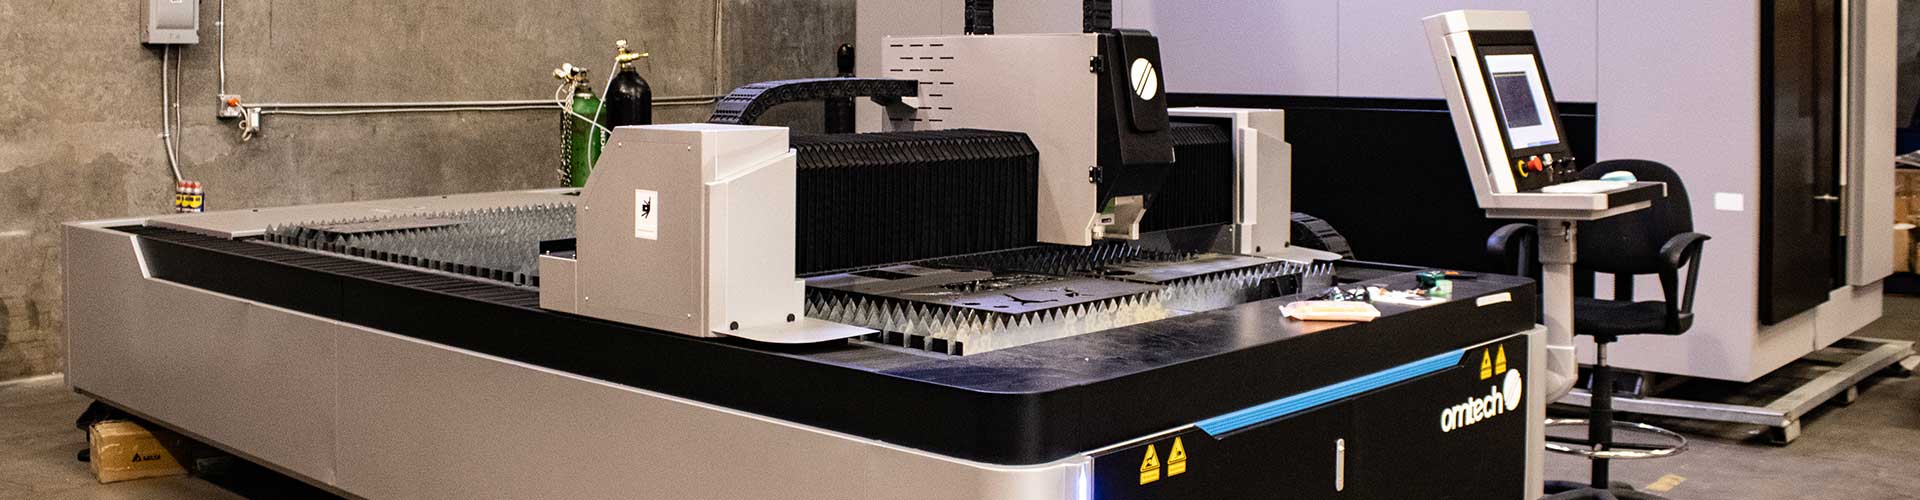 Laser engraving machine laser cutter omtech cutting machine